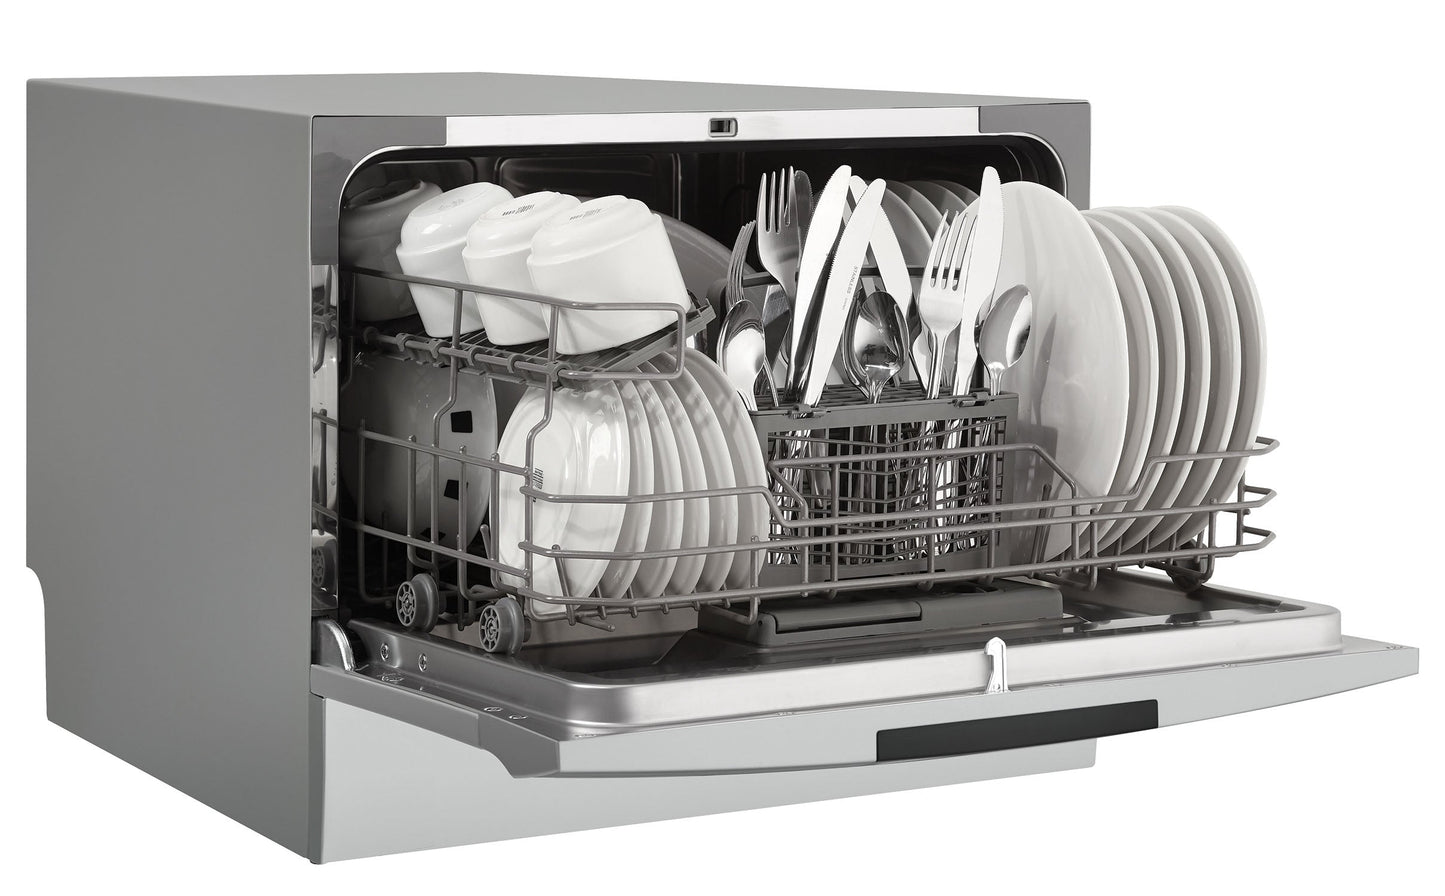 Danby 22" Silver 6-Place Setting Portable Countertop Dishwasher - DDW631SDB